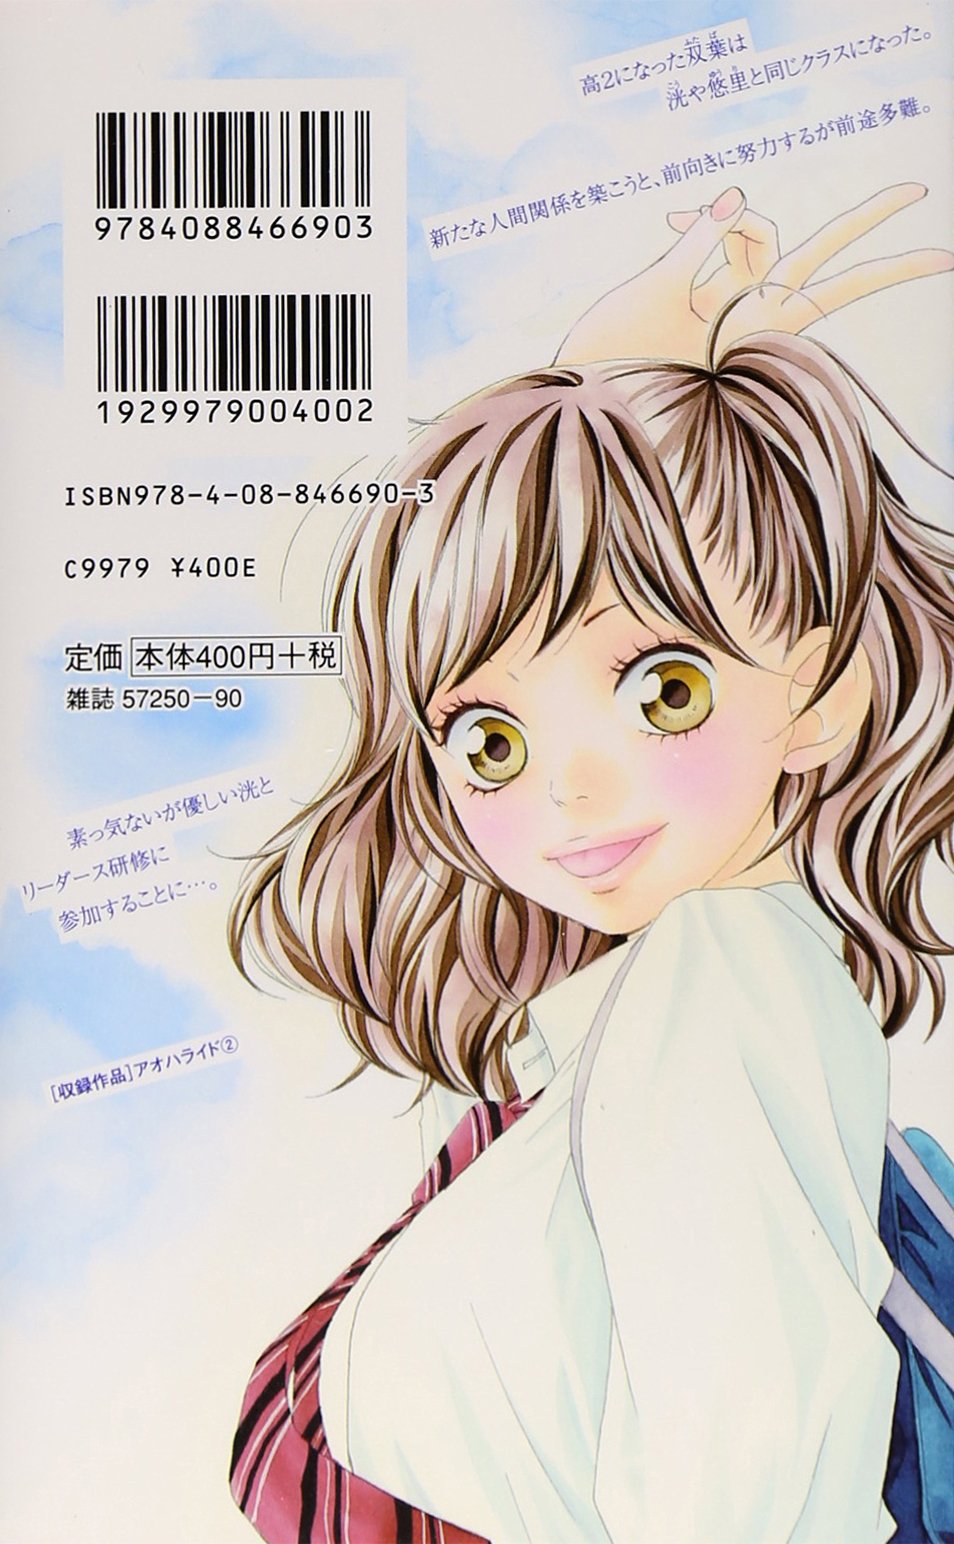 Mua Ao Haru Ride / Aoharaido  [Japanese Edition] trên Amazon Mỹ chính  hãng 2023 | Fado